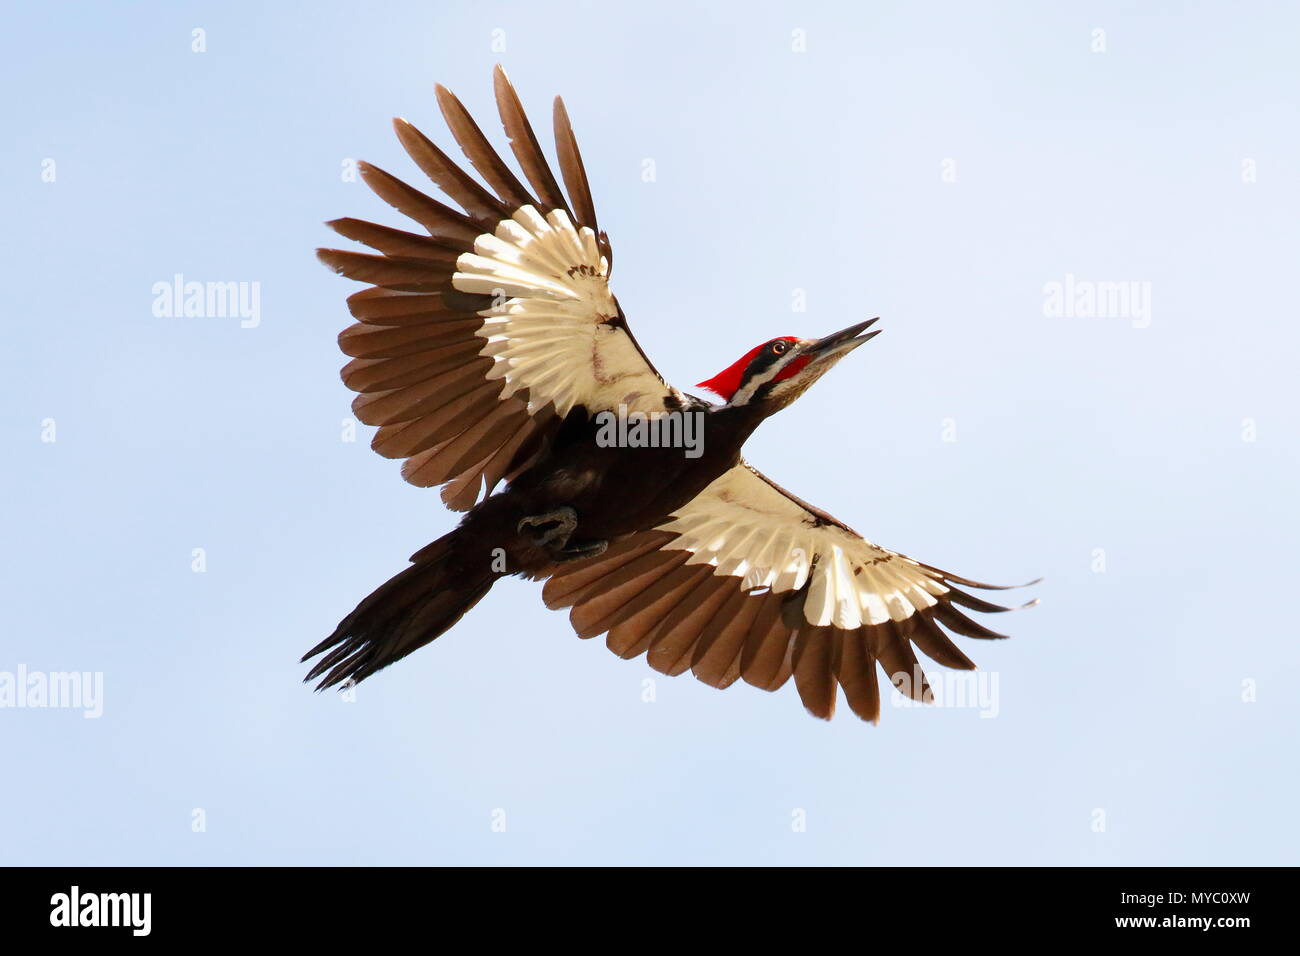 A pileated woodpecker, Dryocopus pileatus, in flight. Stock Photo